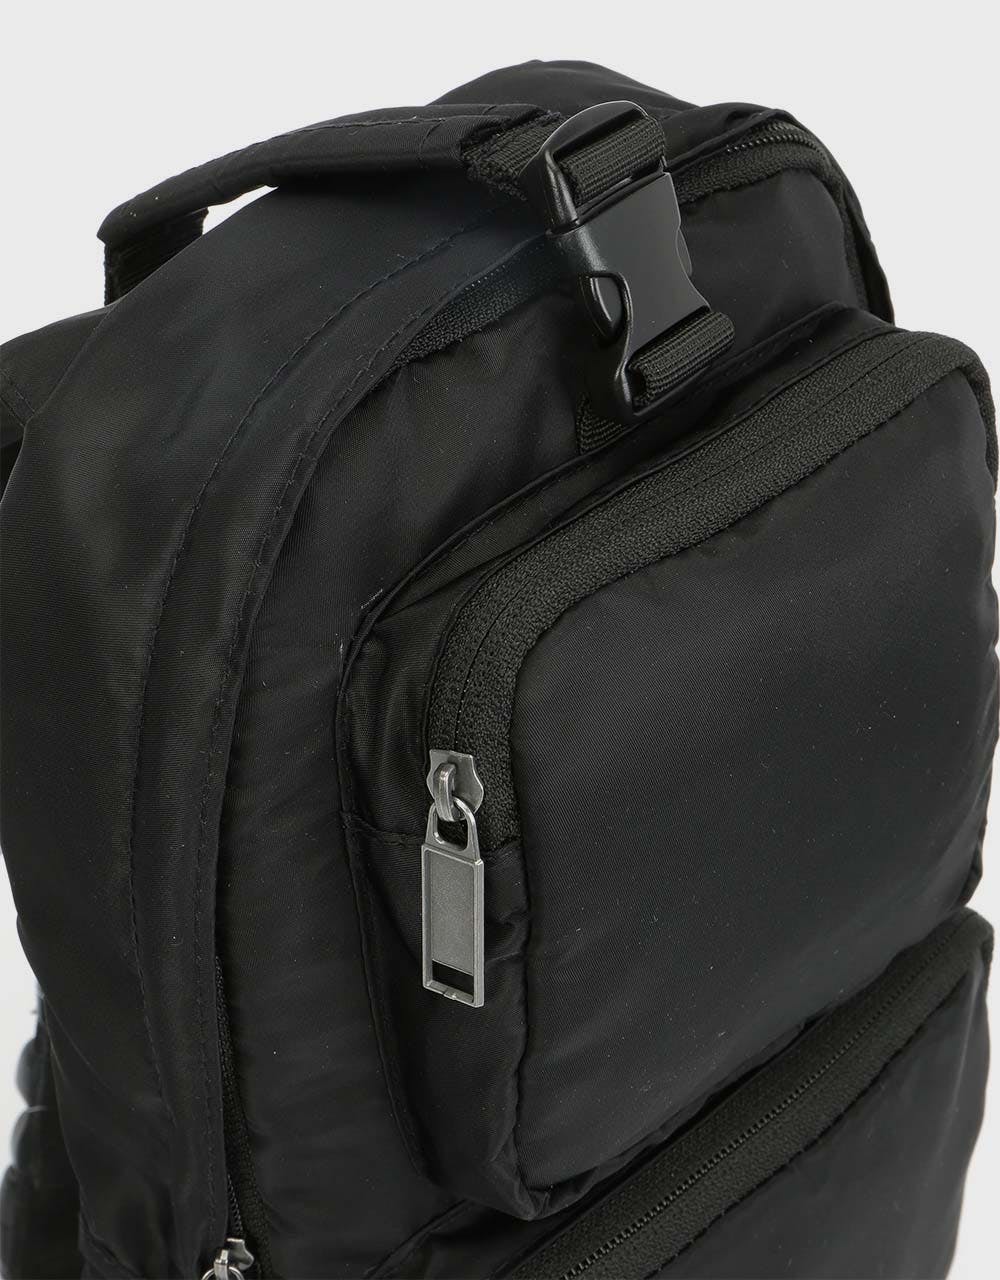 Mi-Pac Nylon Task Cross Body Bag - Black